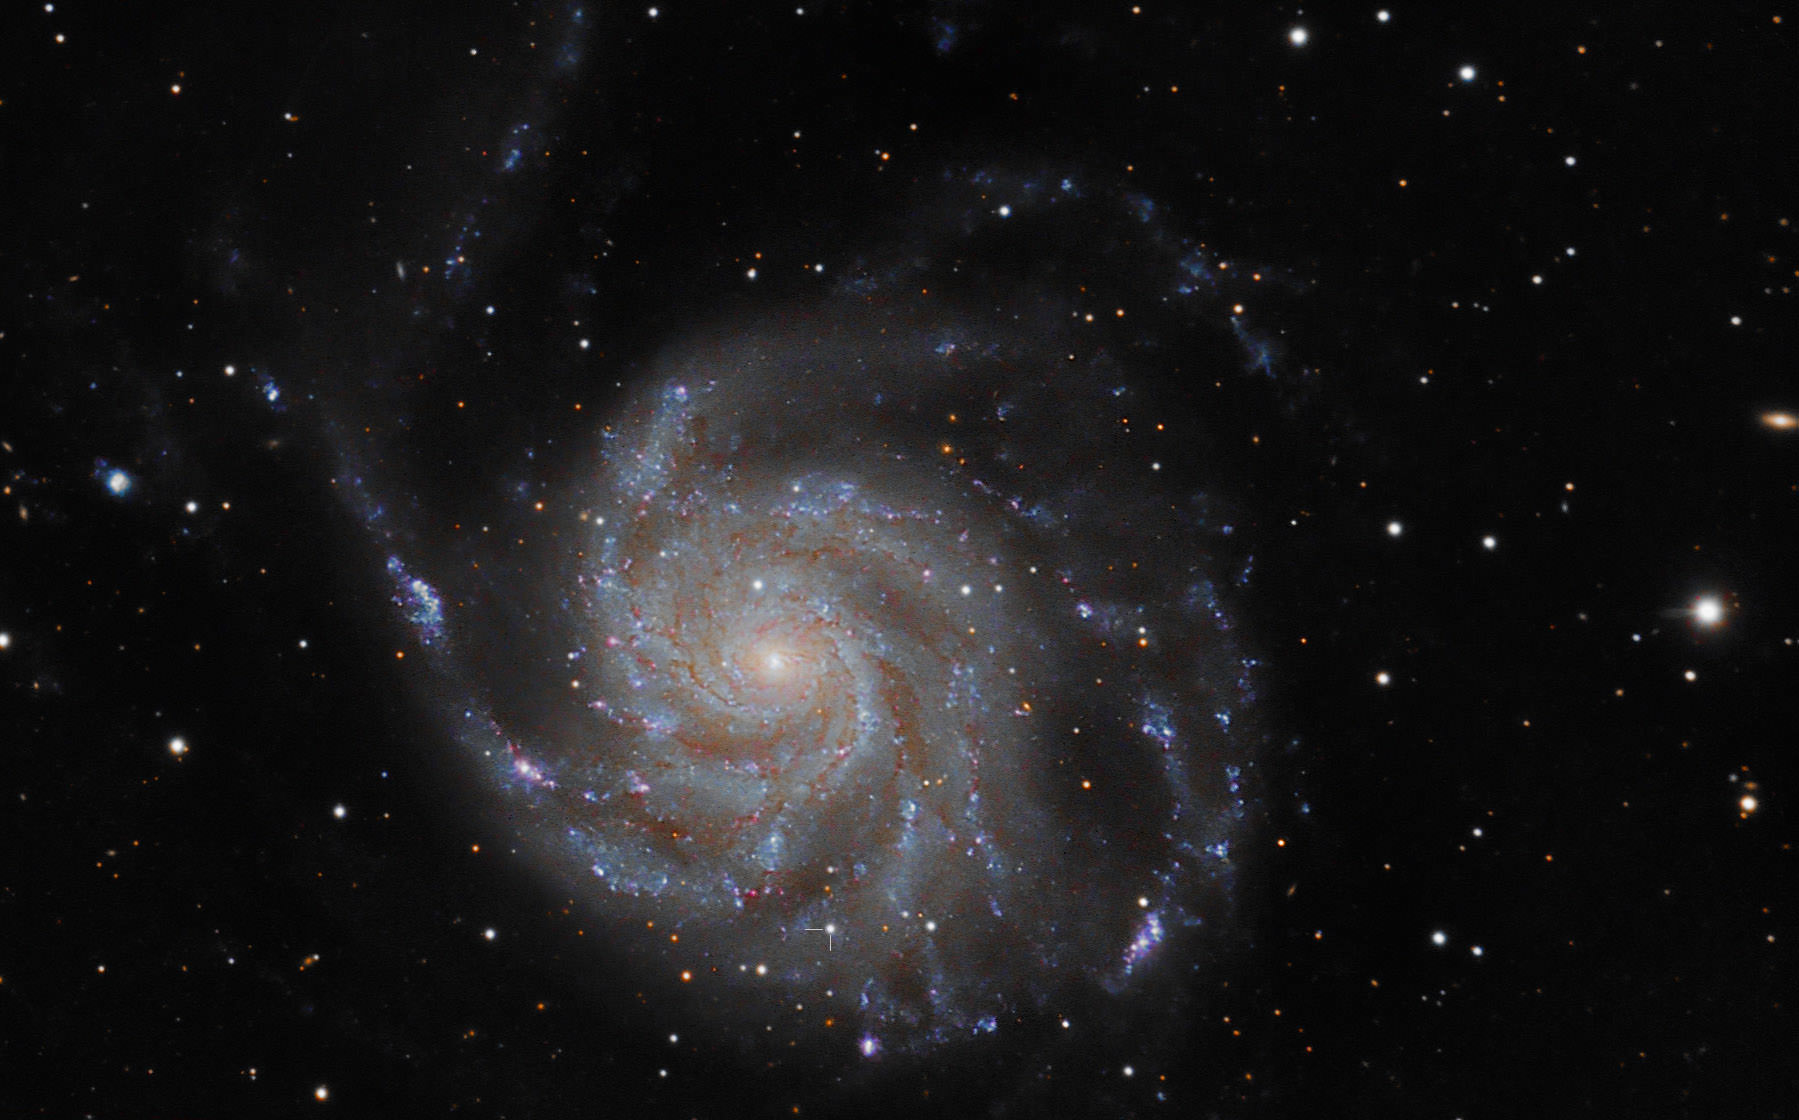 Astrophoto: Supernova PTF11kly in M101 by Rick Johnson